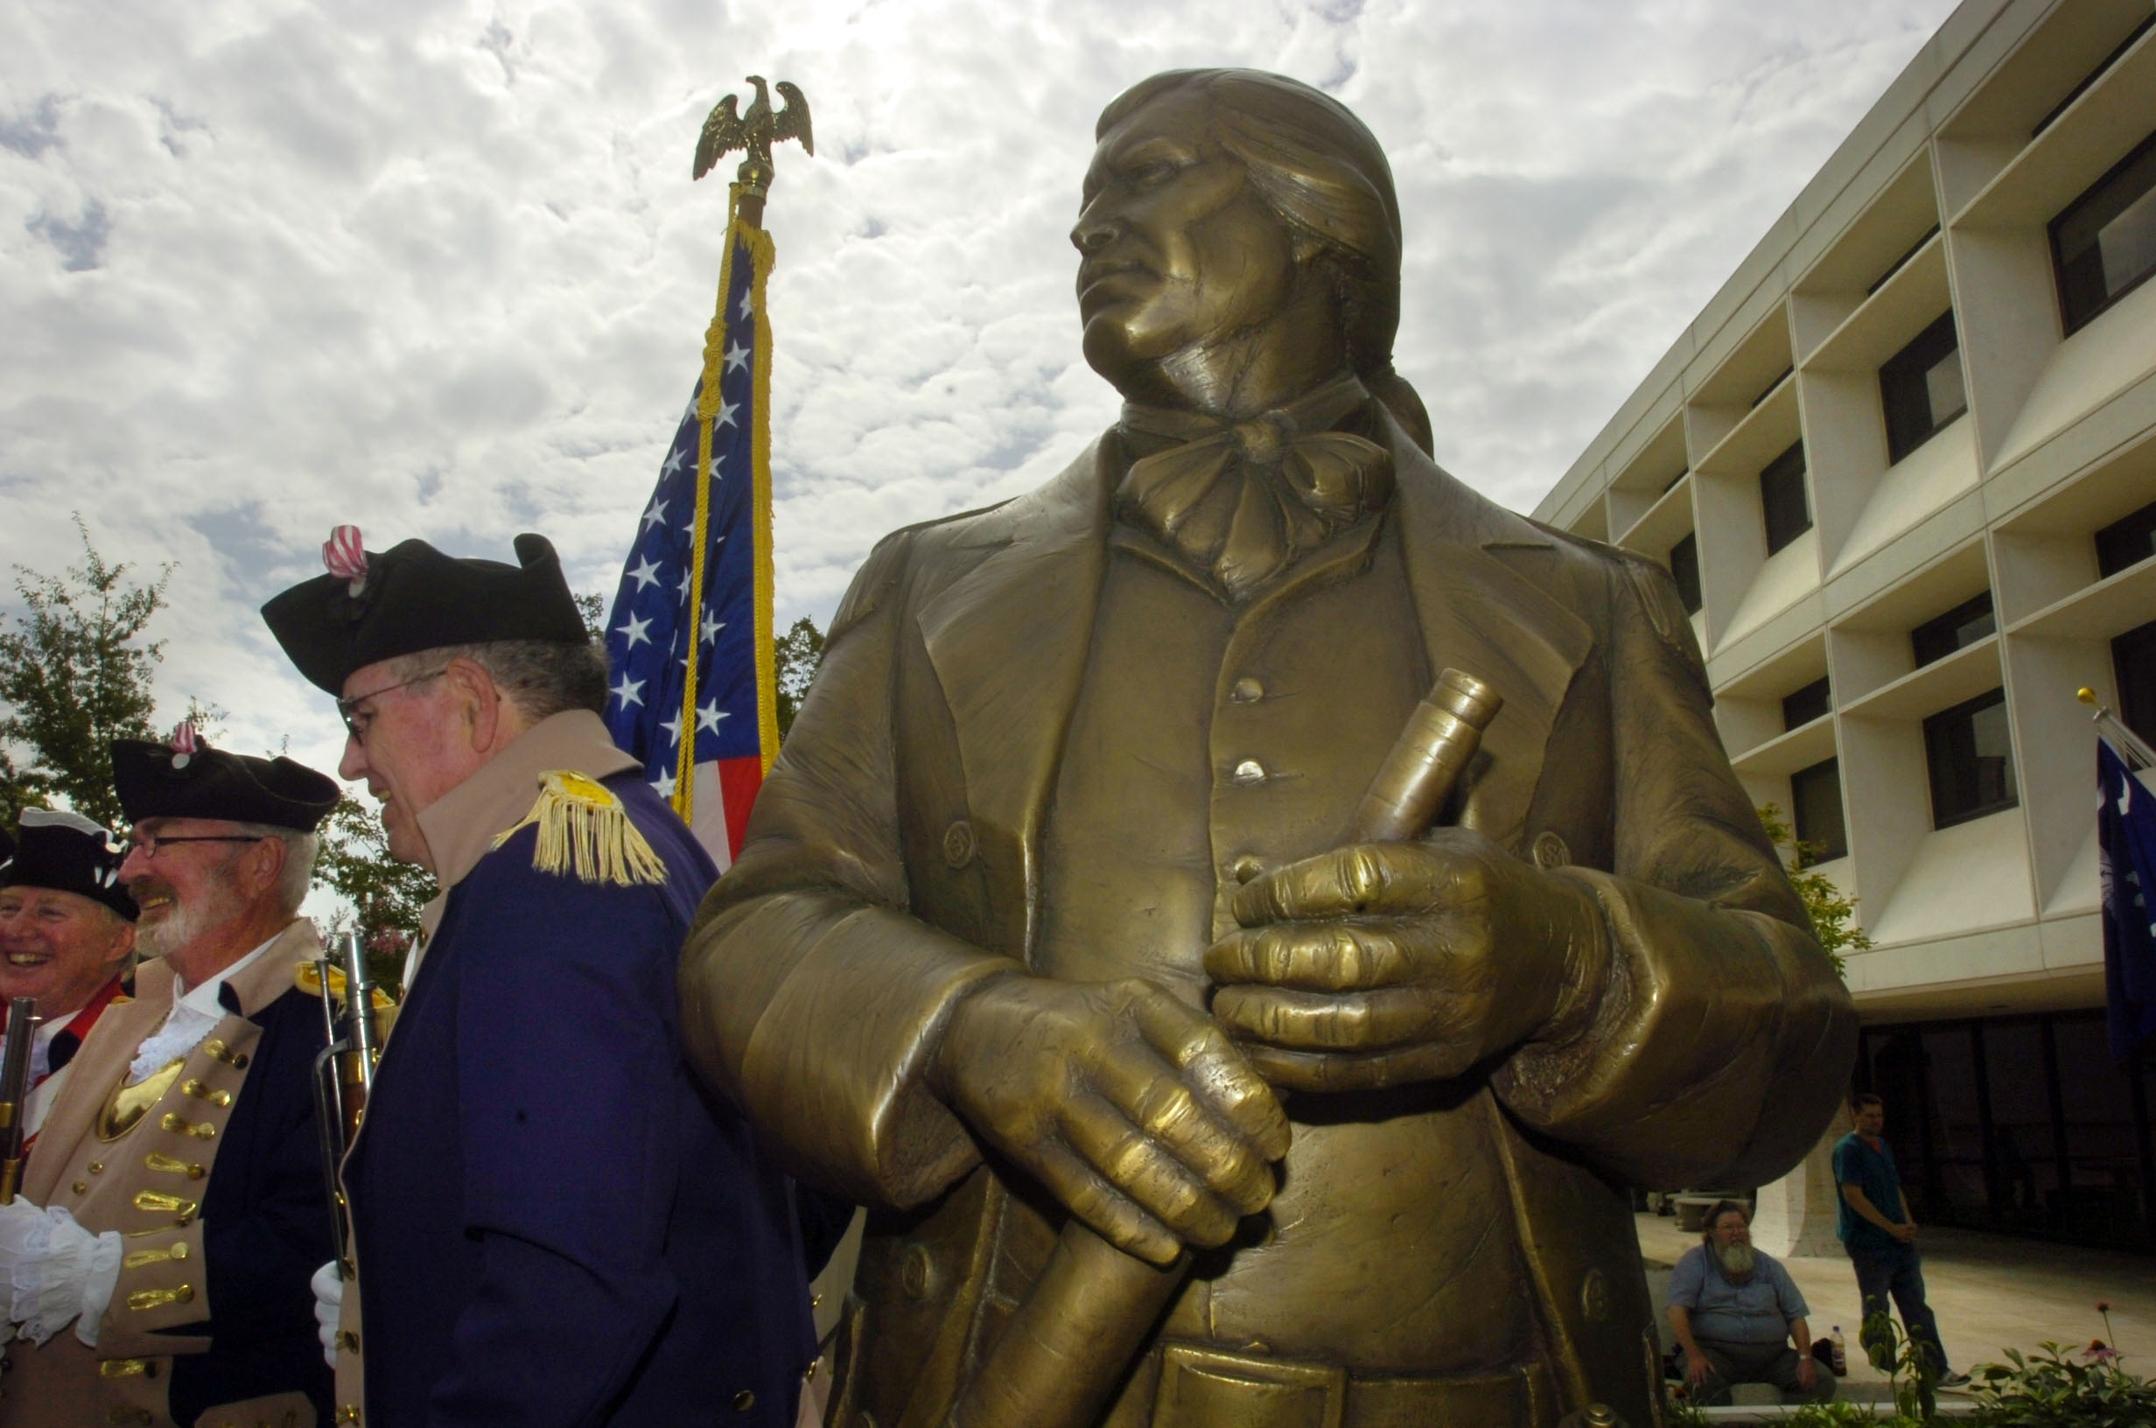 07/28/17: Historians Commemorate Revolutionary War Hero Gen. Nathanael Greene’s 275th Birthday